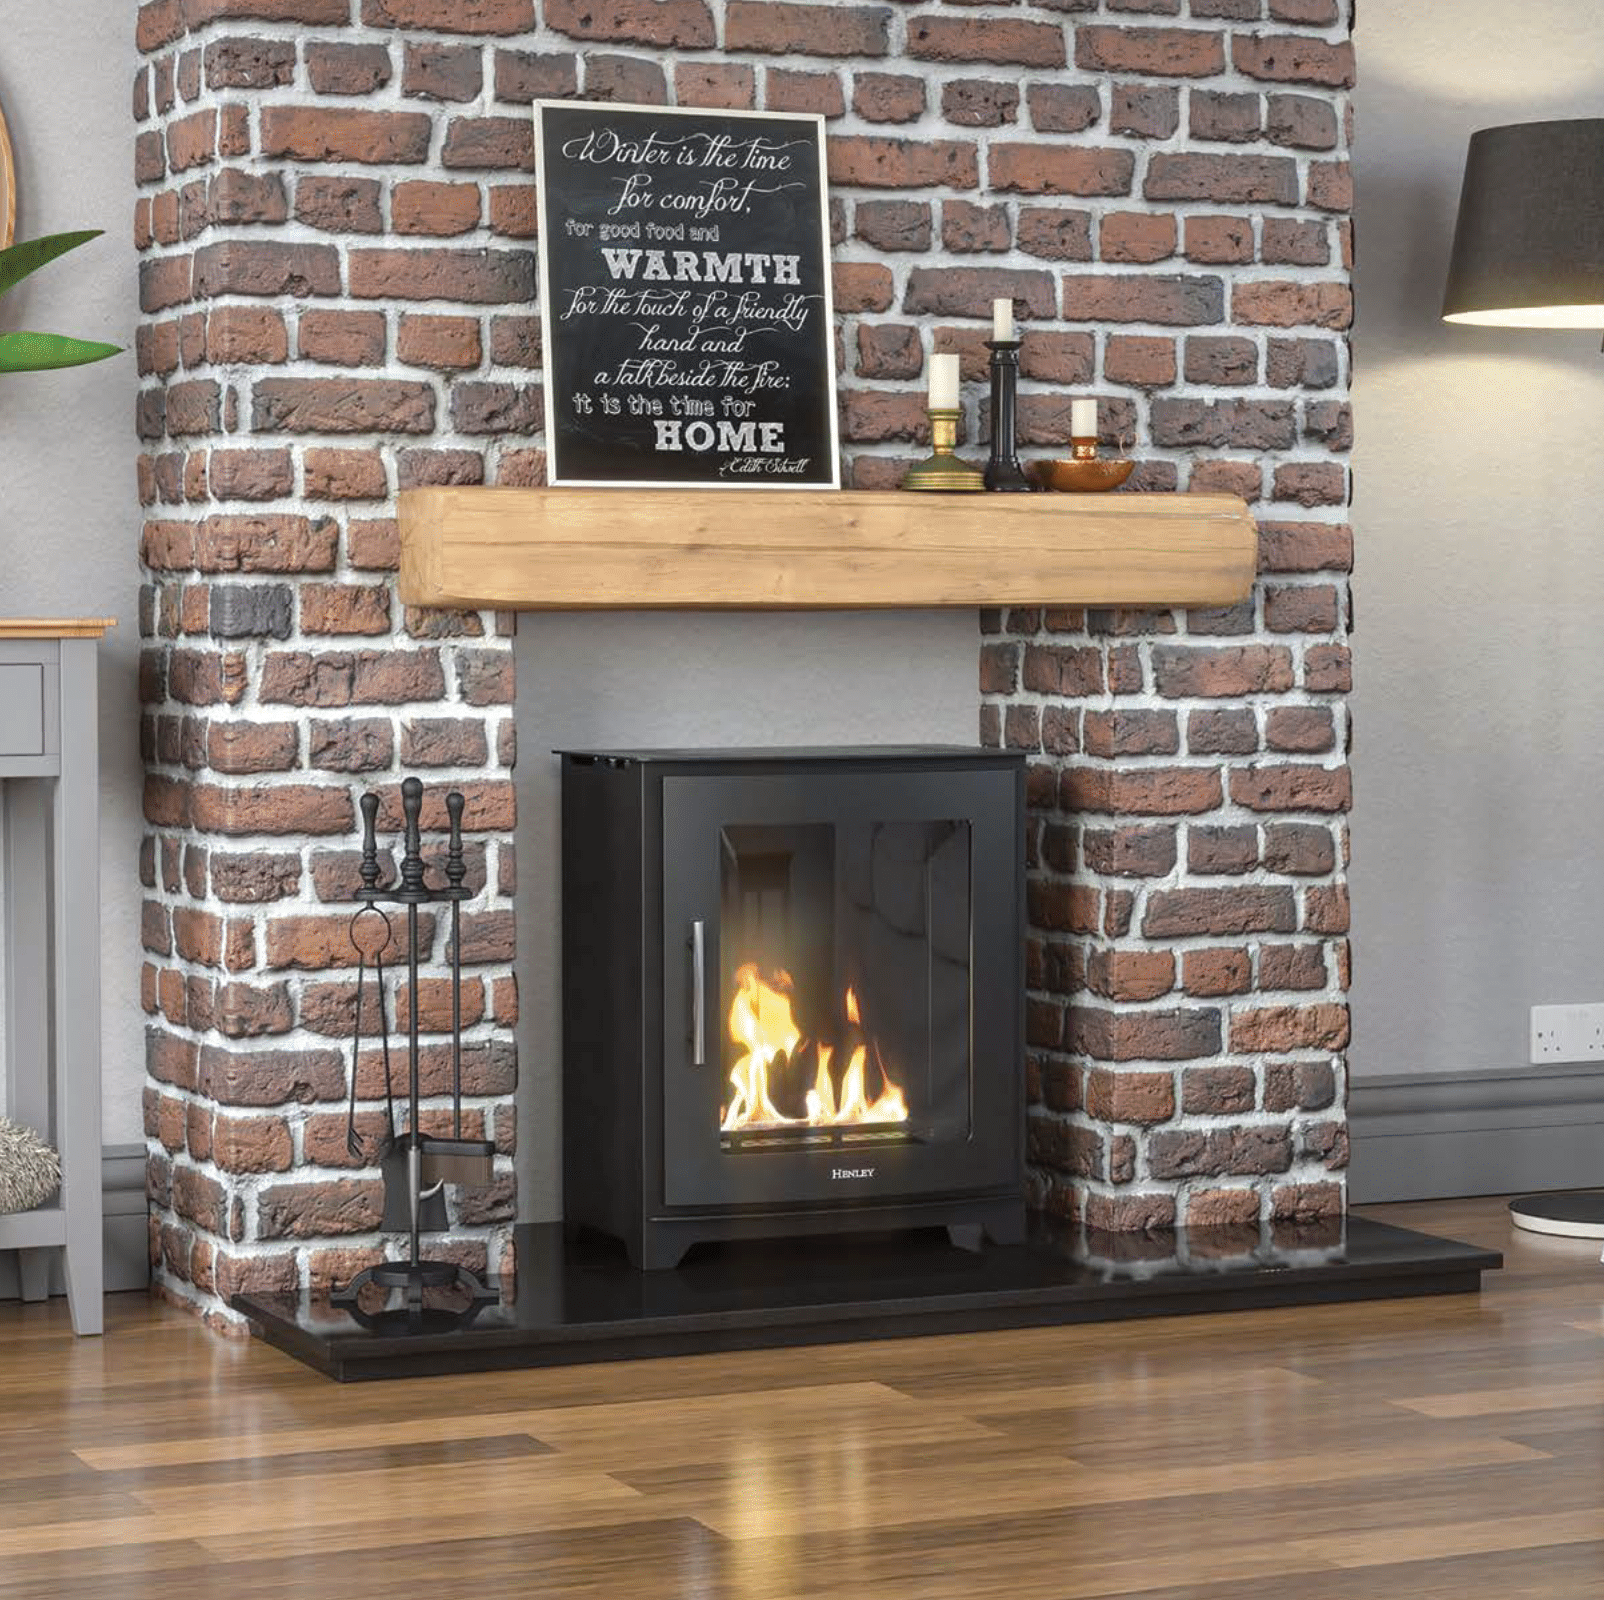 Dalewood Landscape Bio Fireplace -Classic Ambiance Without Chimney/Flue